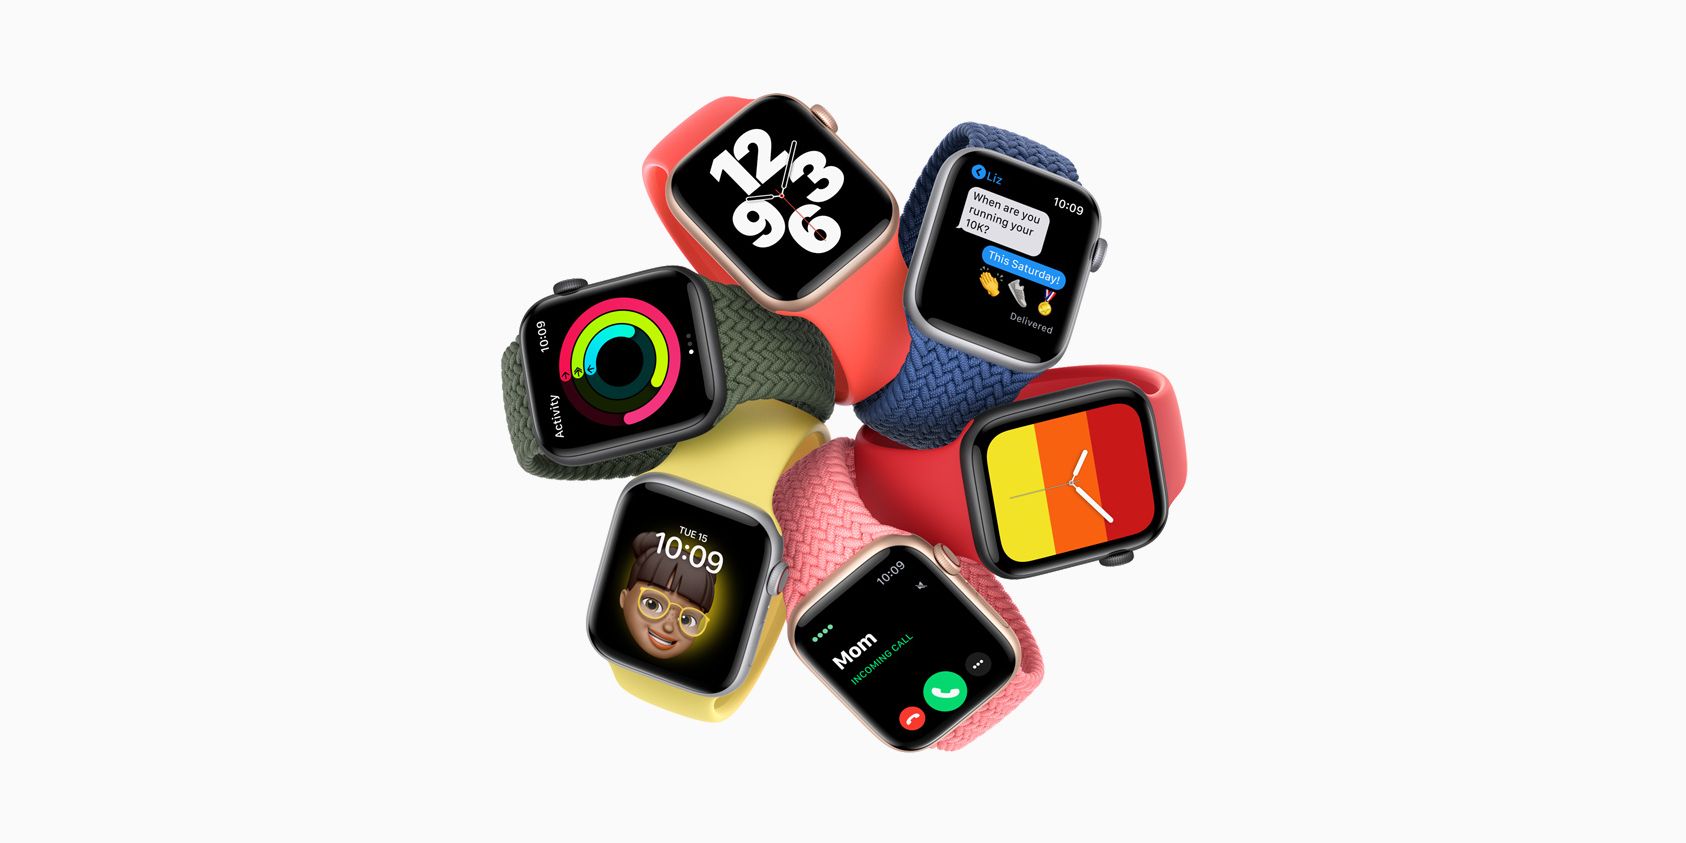 Apple watchOS 7.1 on the Apple Watch